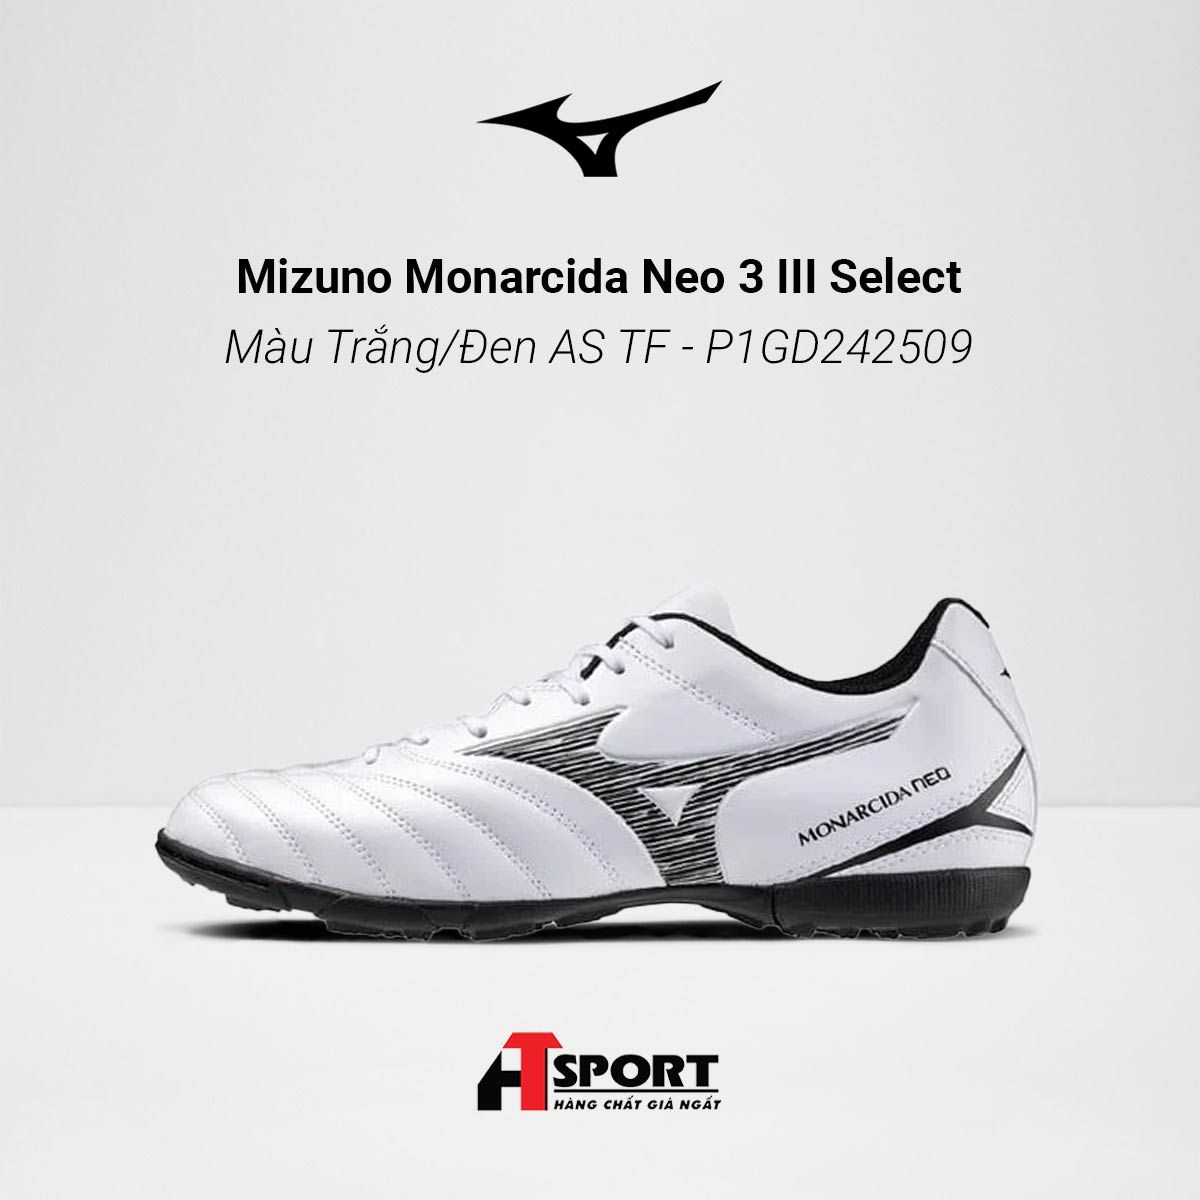  Mizuno Monarcida Neo 3 III Select Màu Trắng/Đen AS TF - P1GD242509 